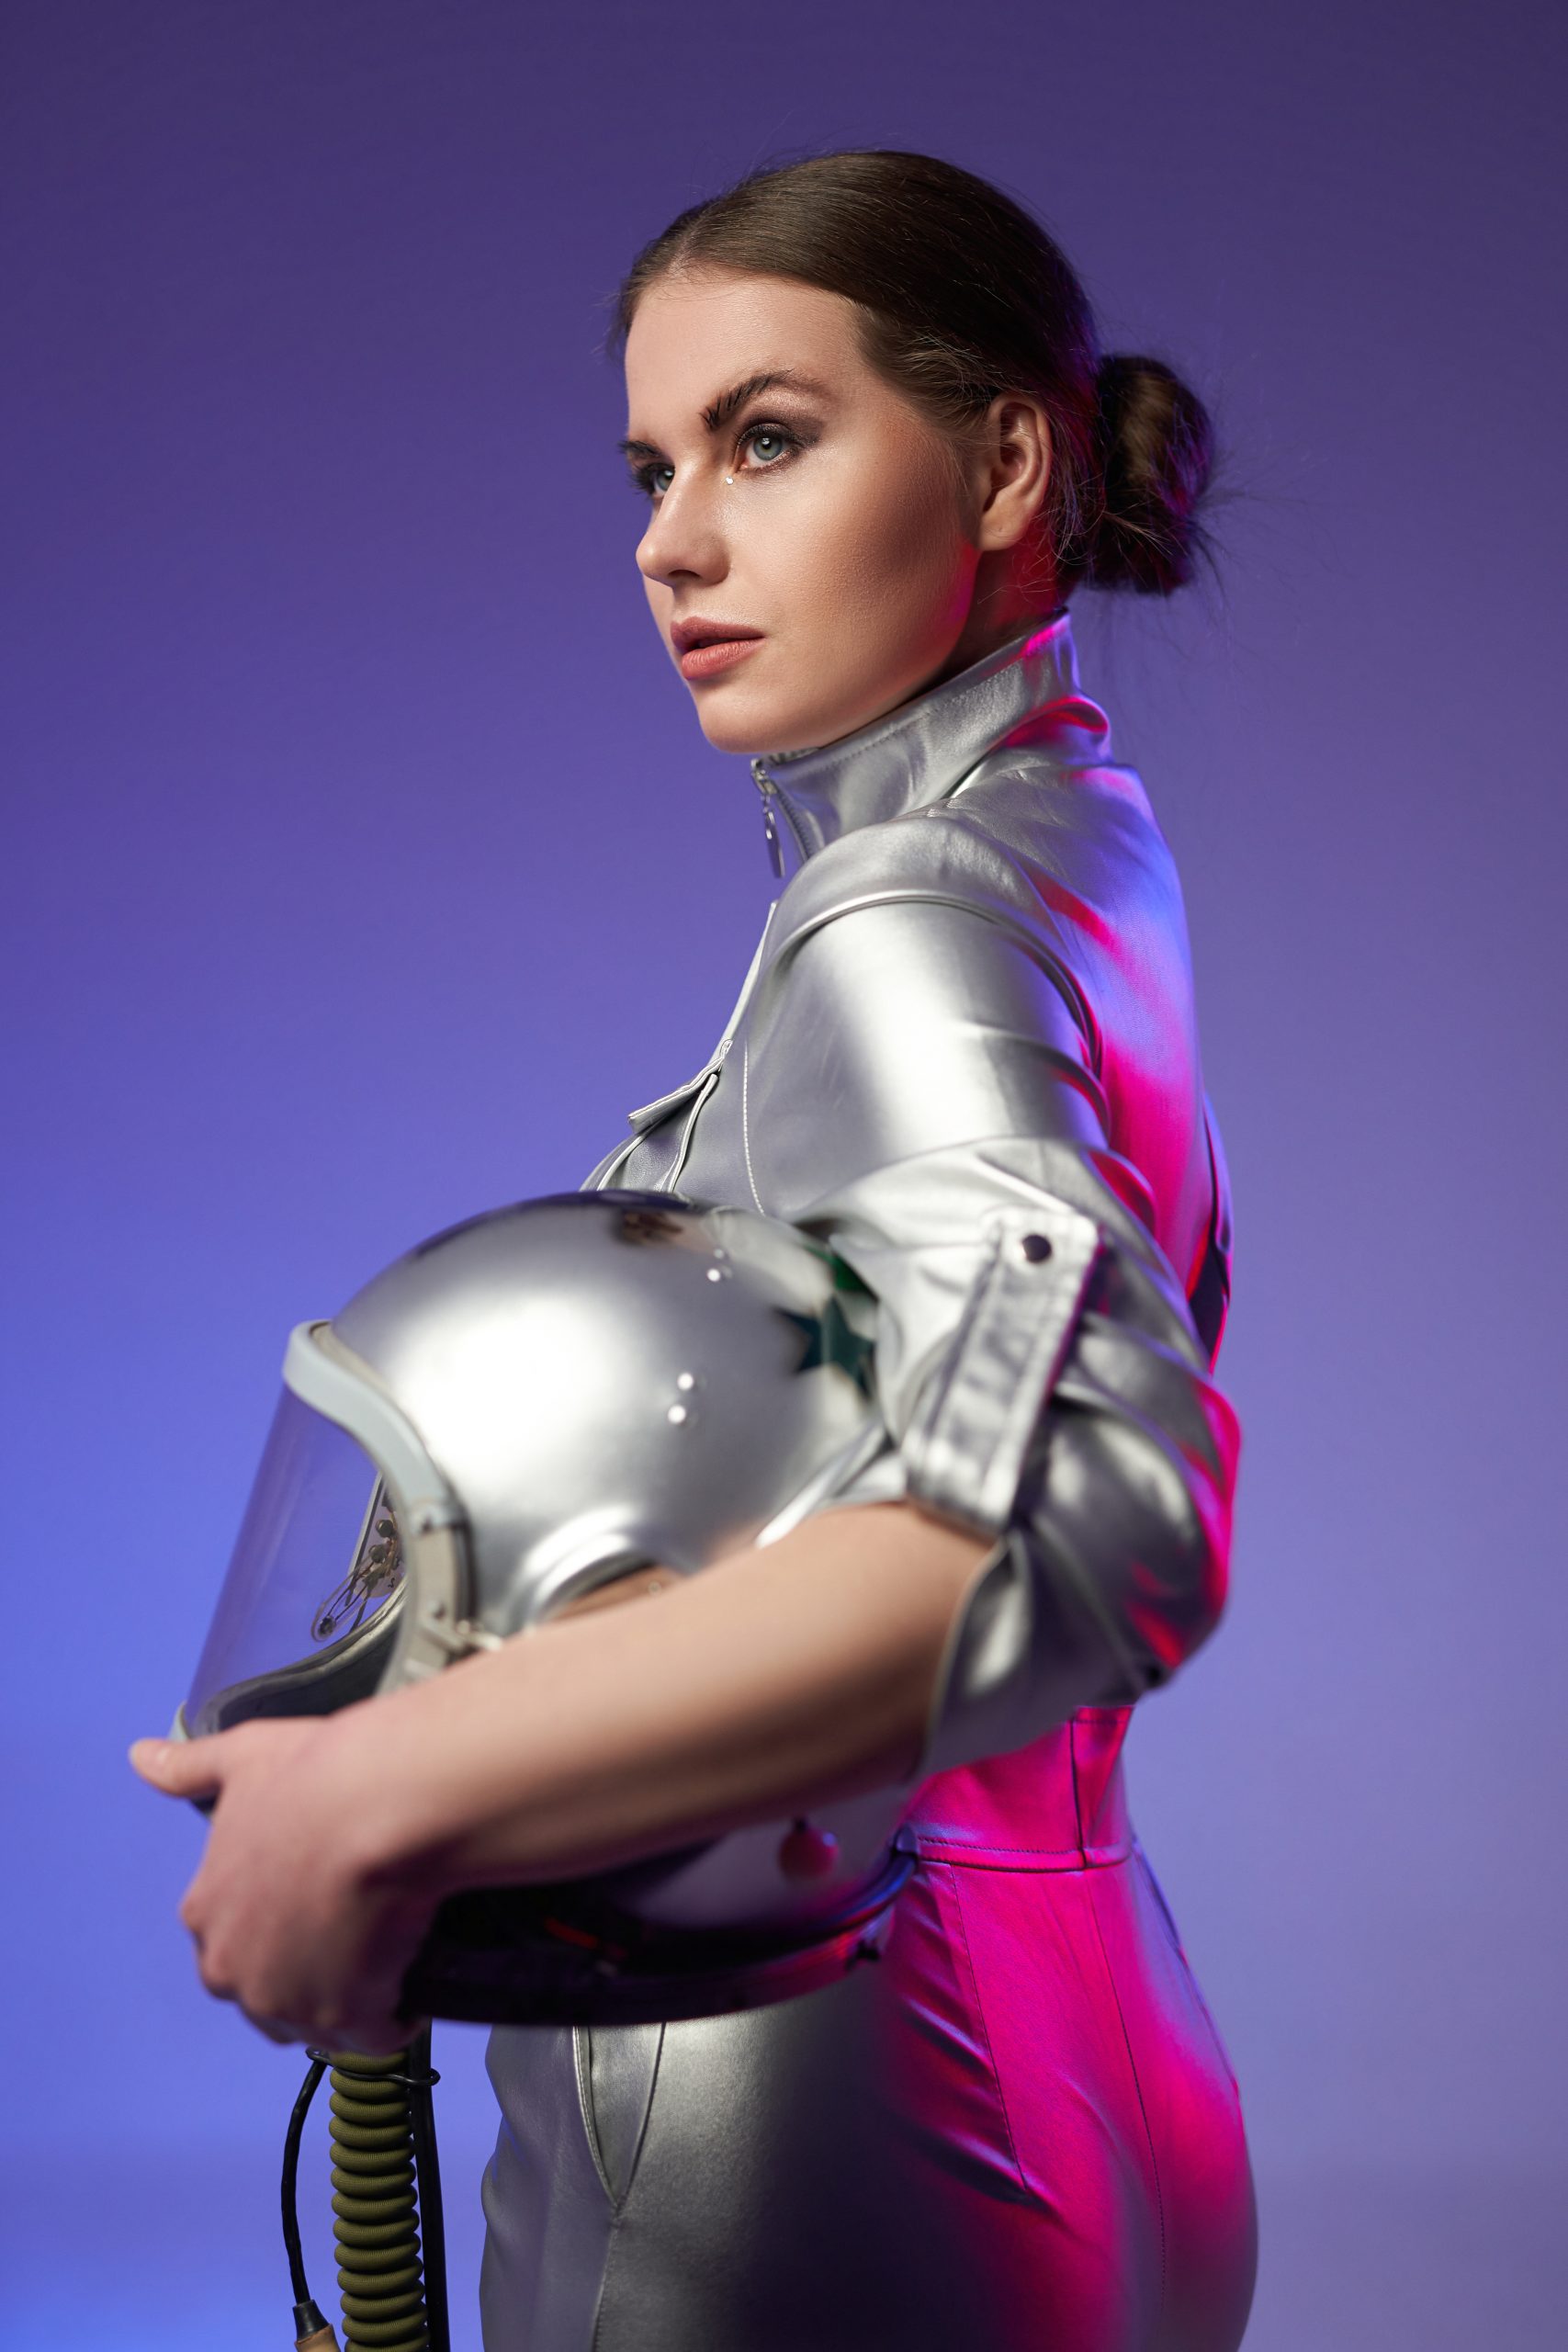 Studio shot of woman astronaut in silver protective uniform holding helmet.